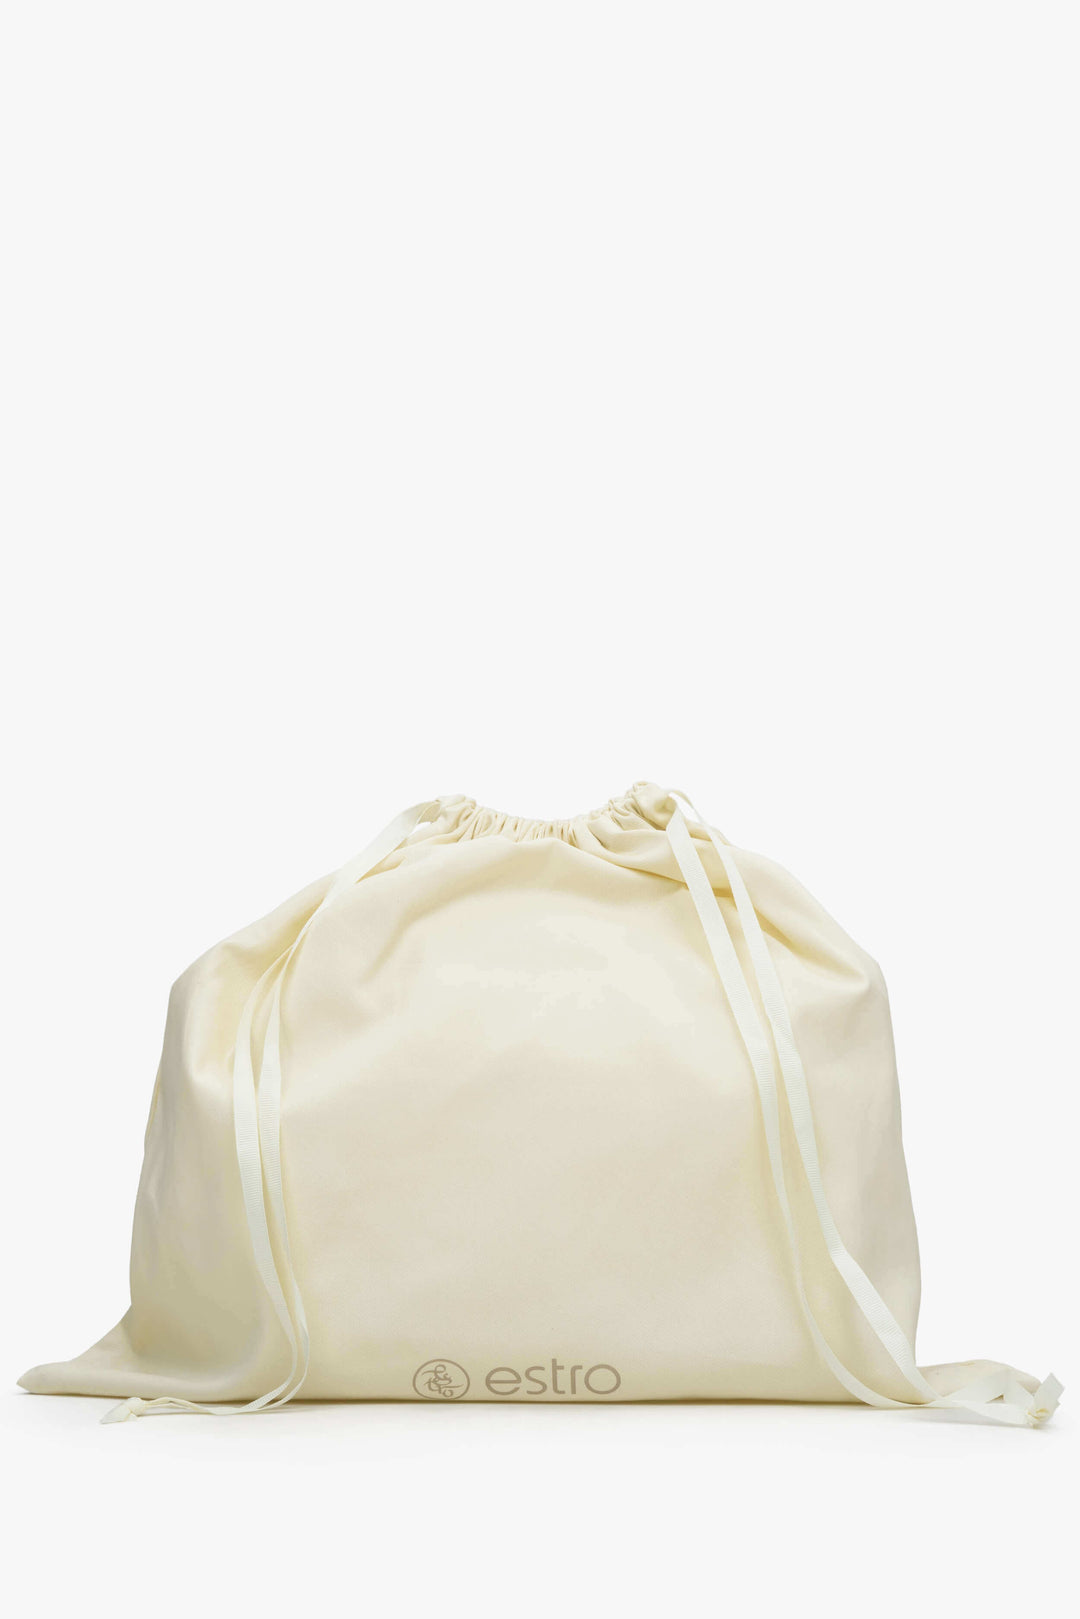 Women's Black Chain Strap Shoulder Bag with Silver Accents Estro ER00114428